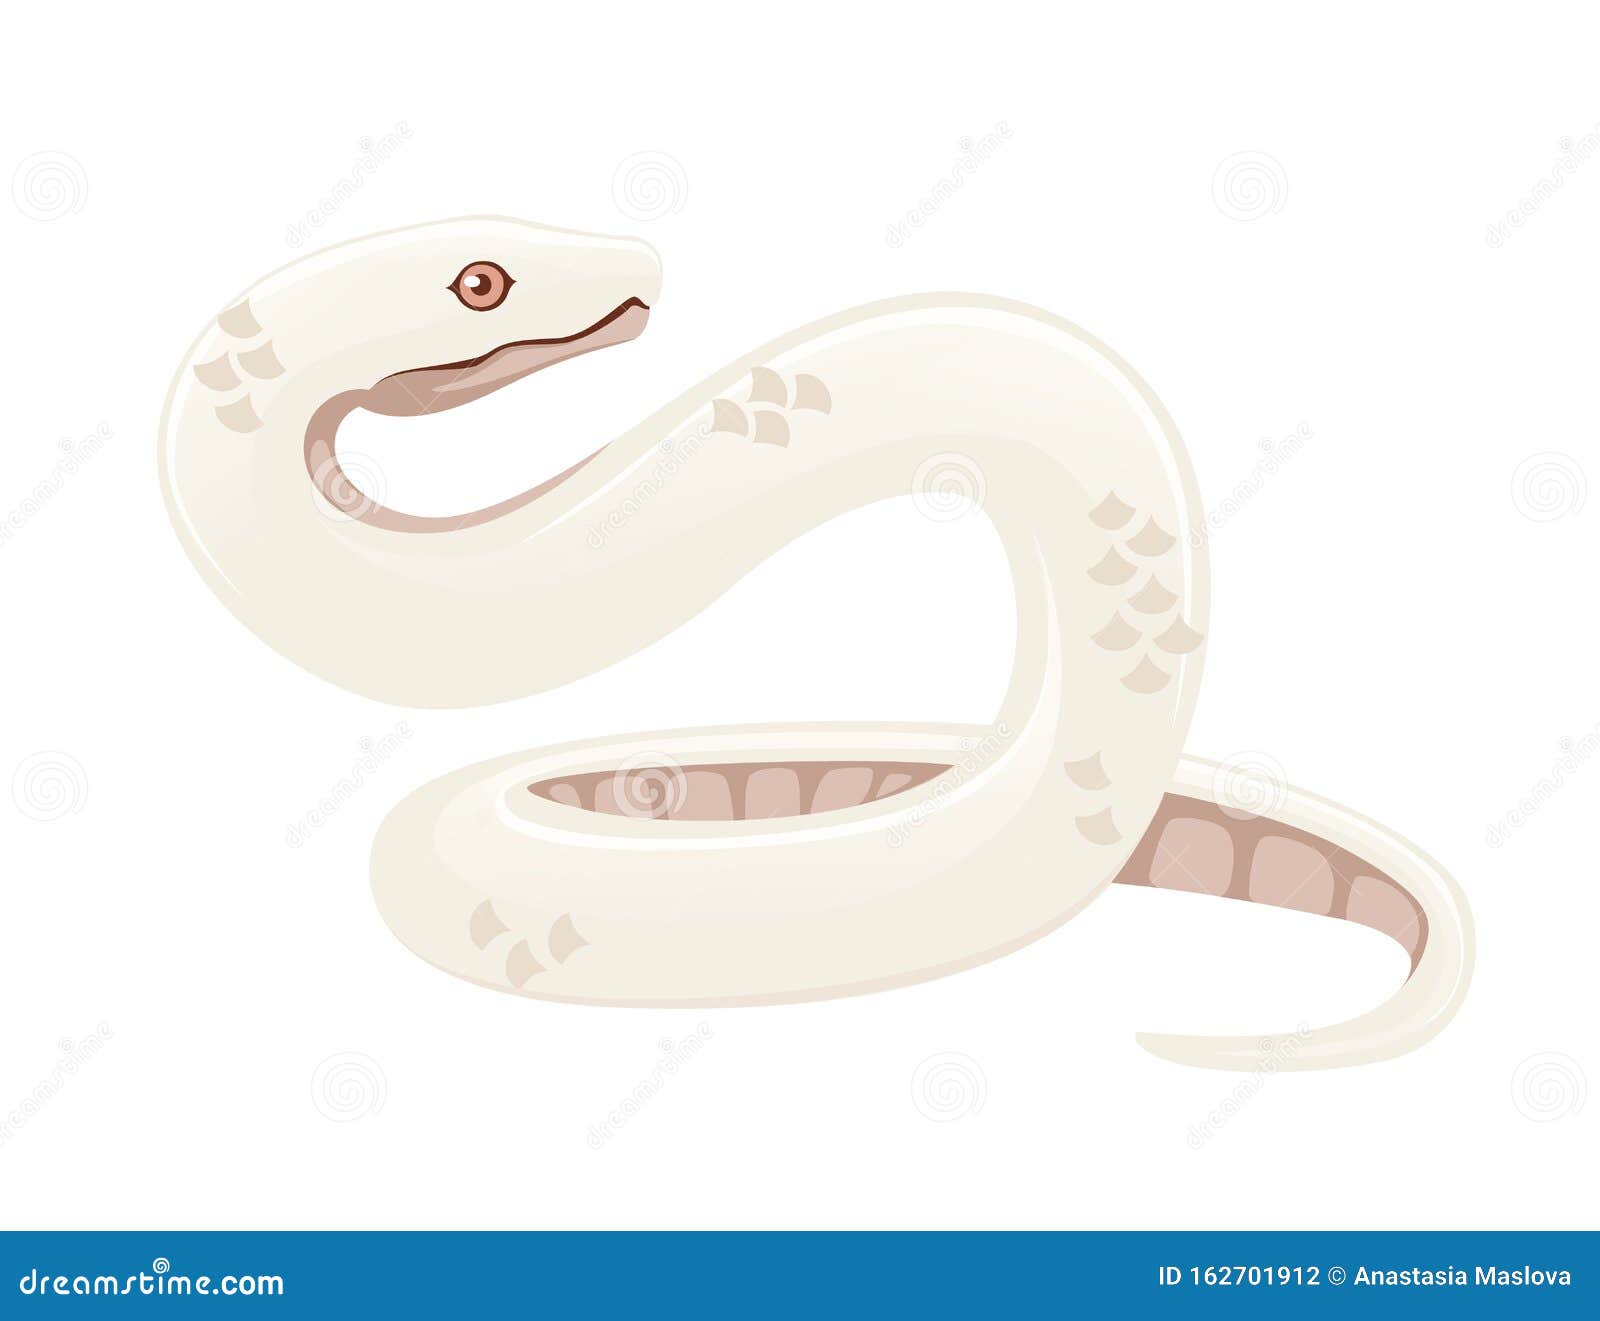 White Albino Snake Cartoon Animal Design Flat Vector Illustration Isolated  on White Background Stock Illustration - Illustration of huge, dangerous:  162701912